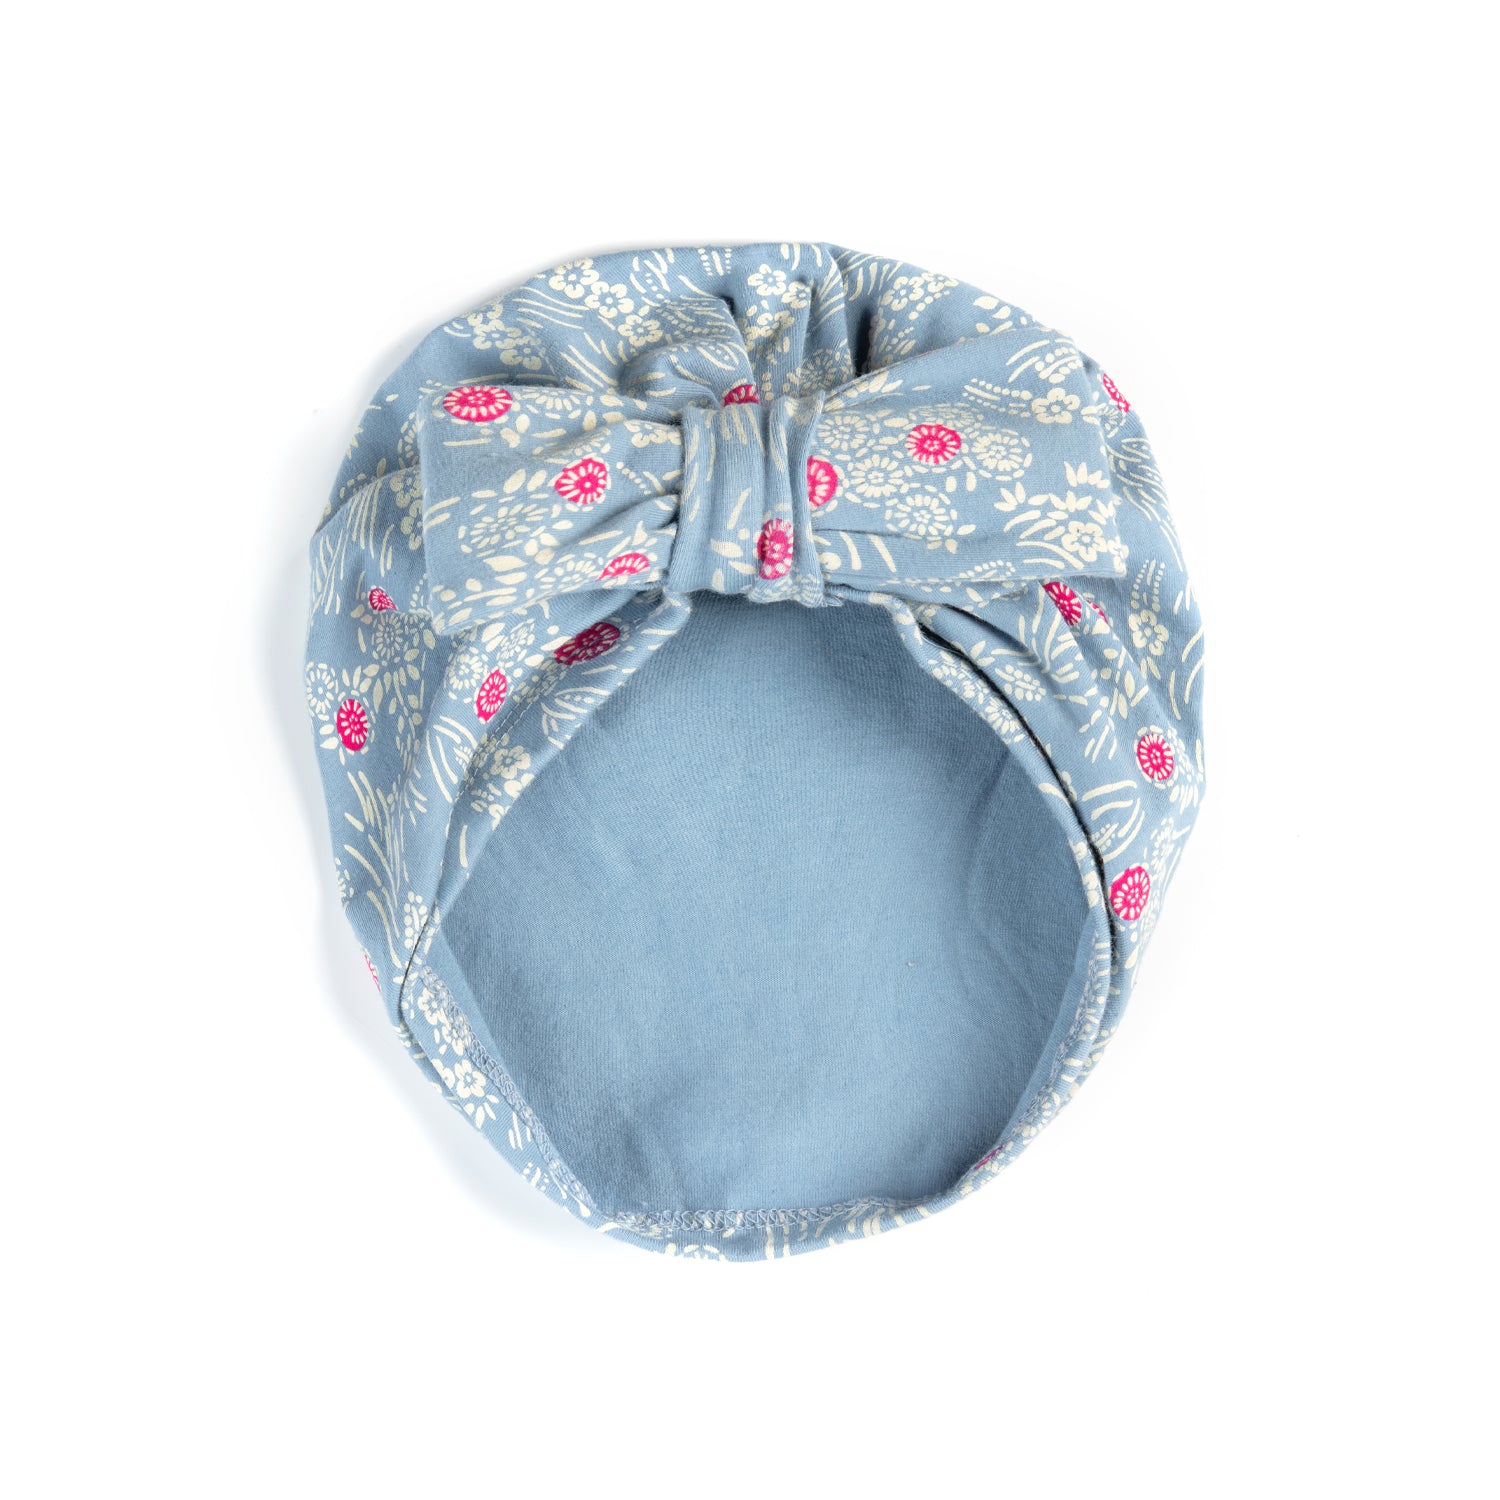 Organic Cotton Baby Bow Turban: Cherry Blossom